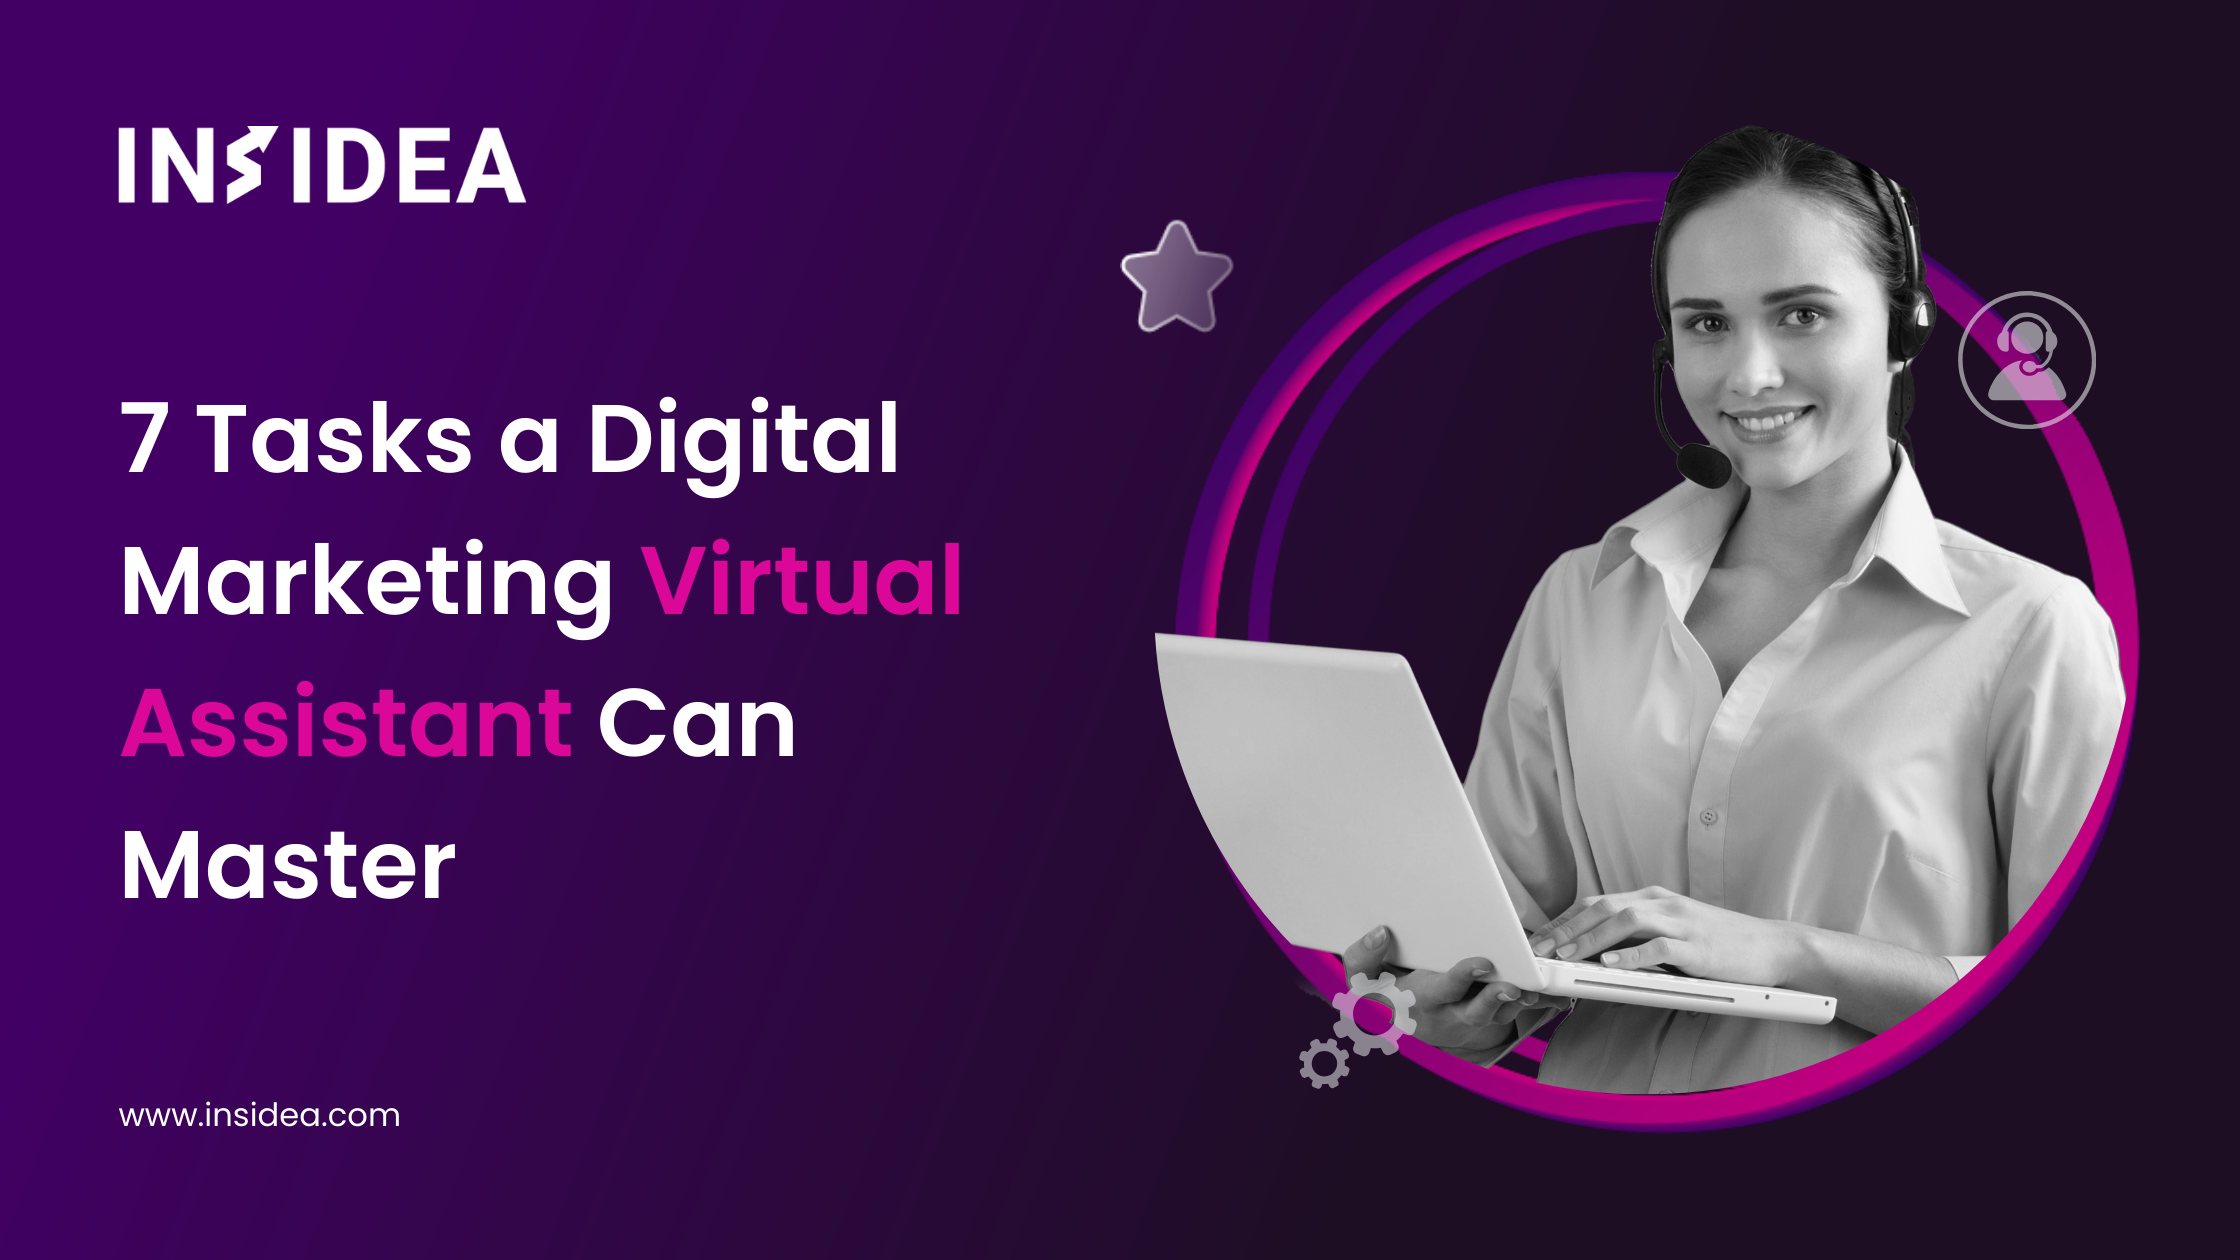 7 Tasks a Digital Marketing Virtual Assistant Can Master